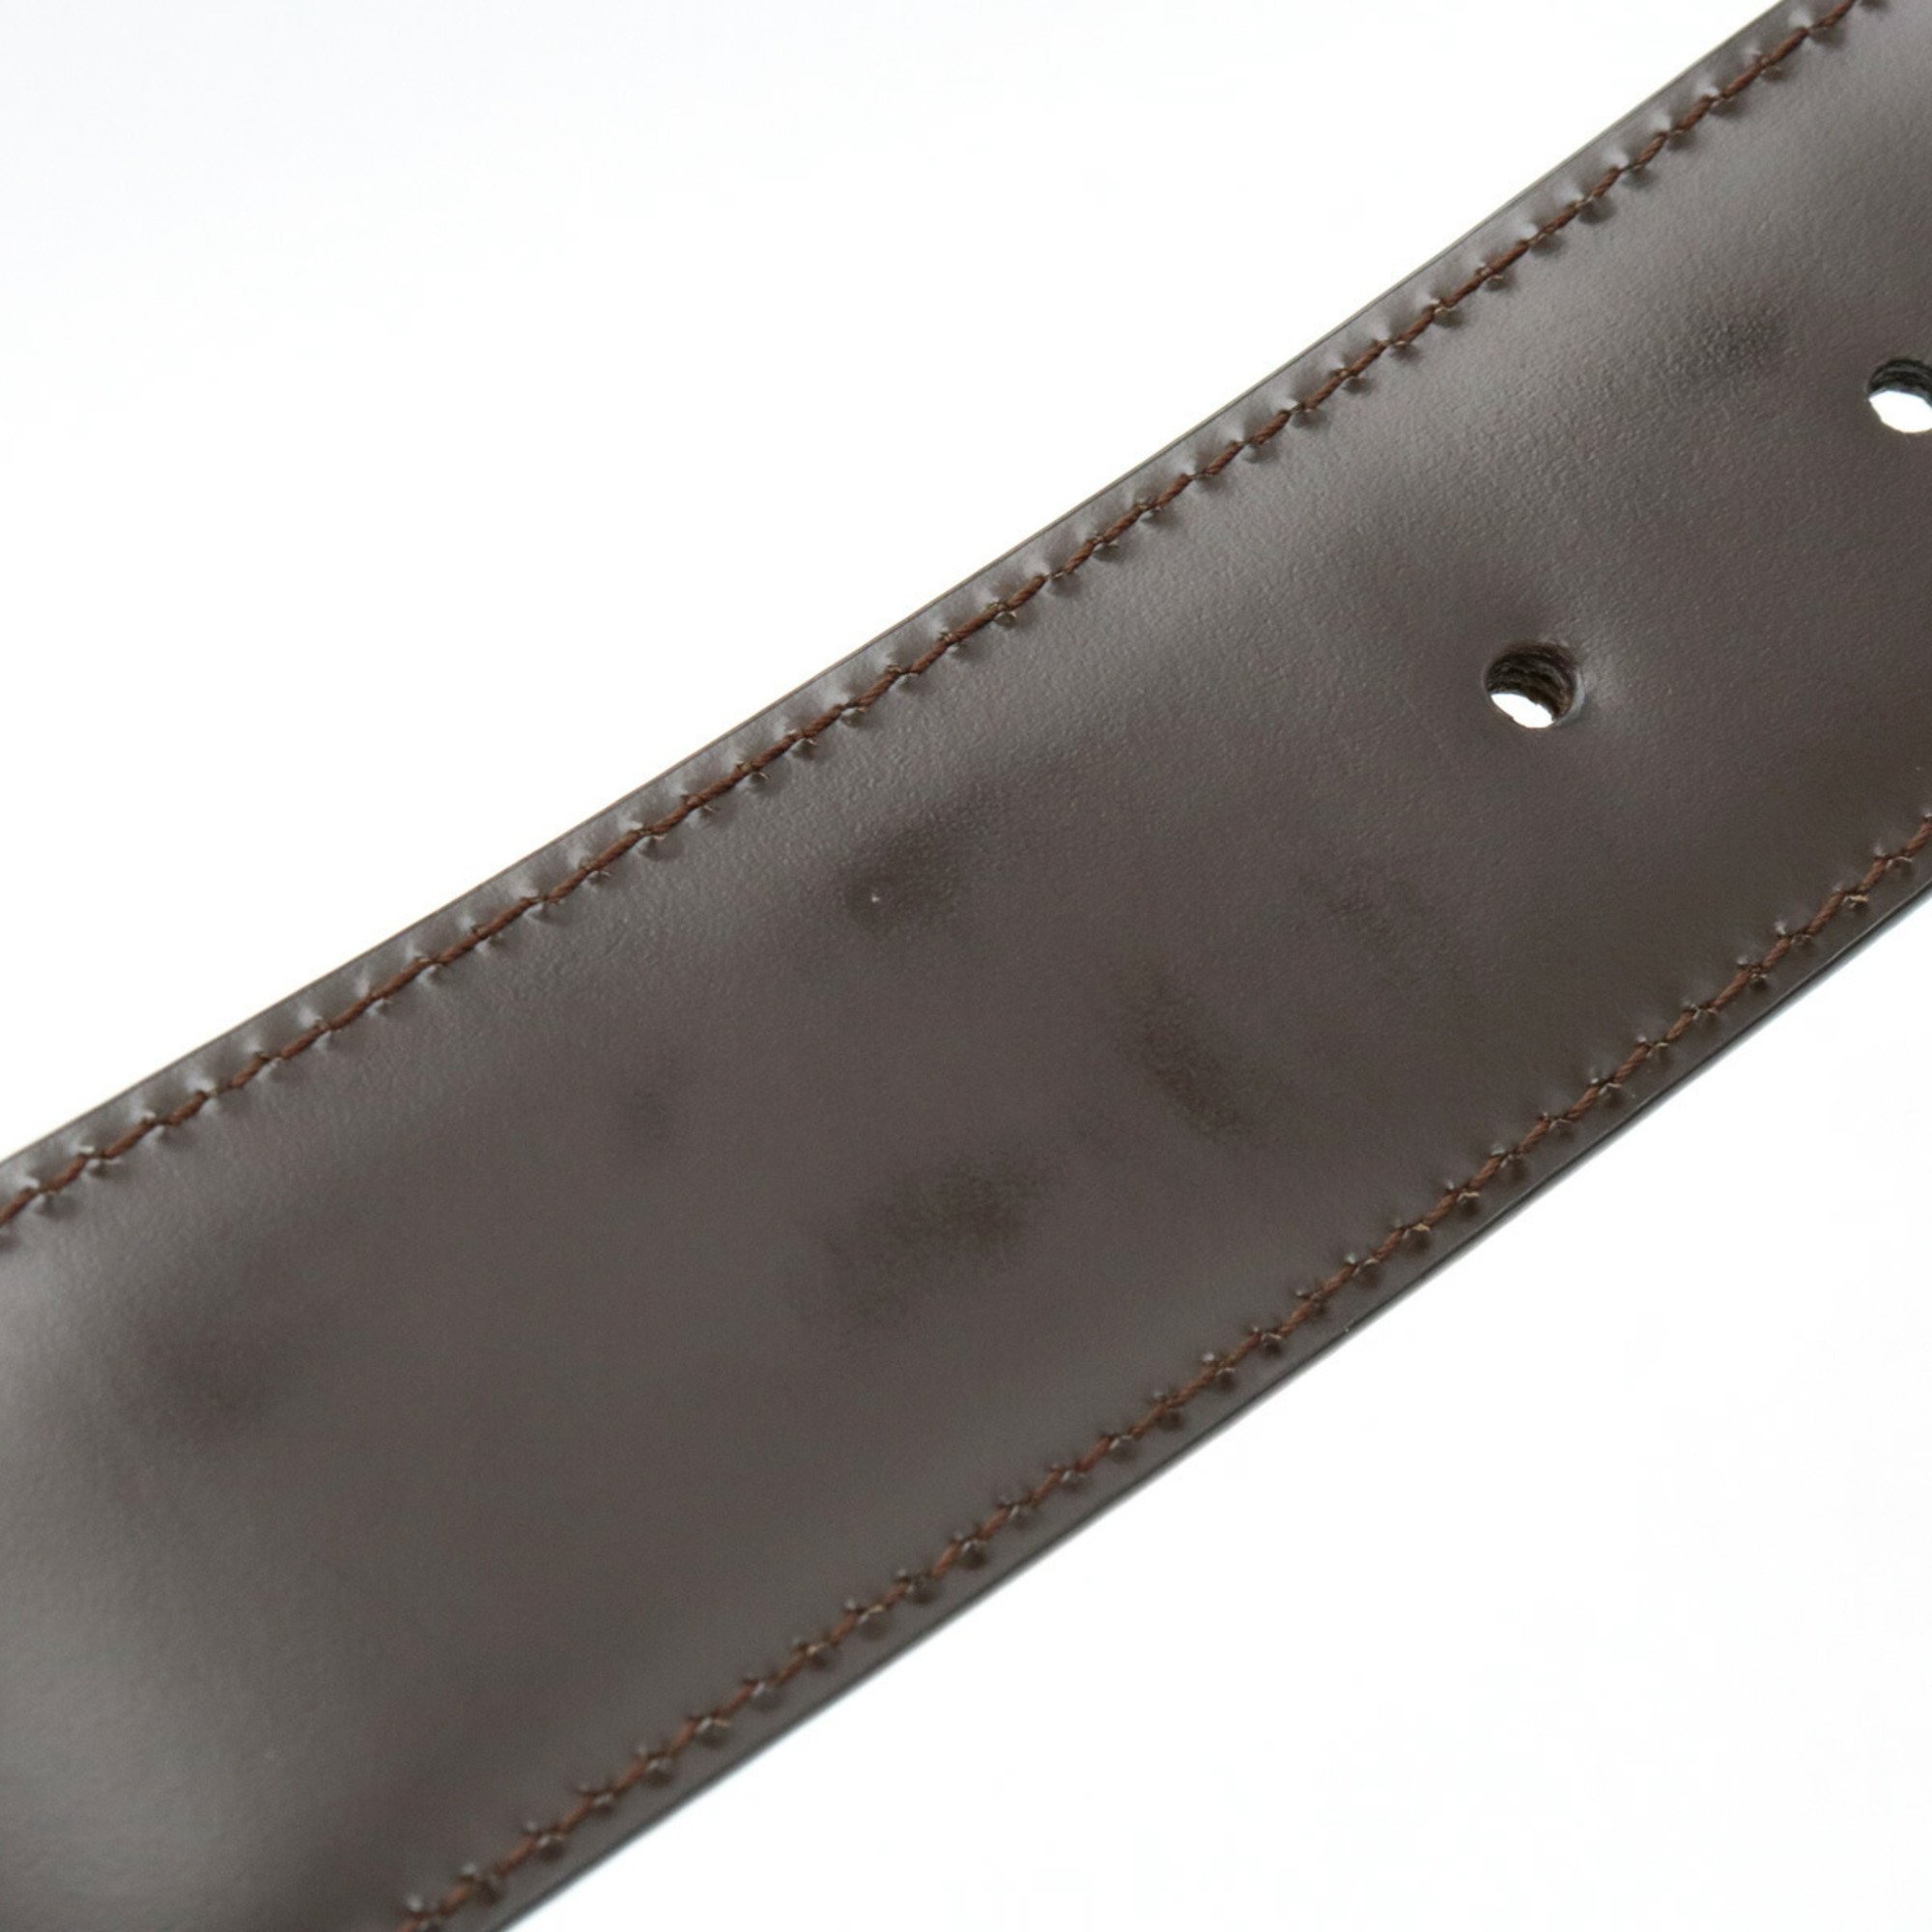 BVLGARI Bulgari Belt Round Buckle Leather Dark Brown Size 44/110 Actual 91cm Cut 20230